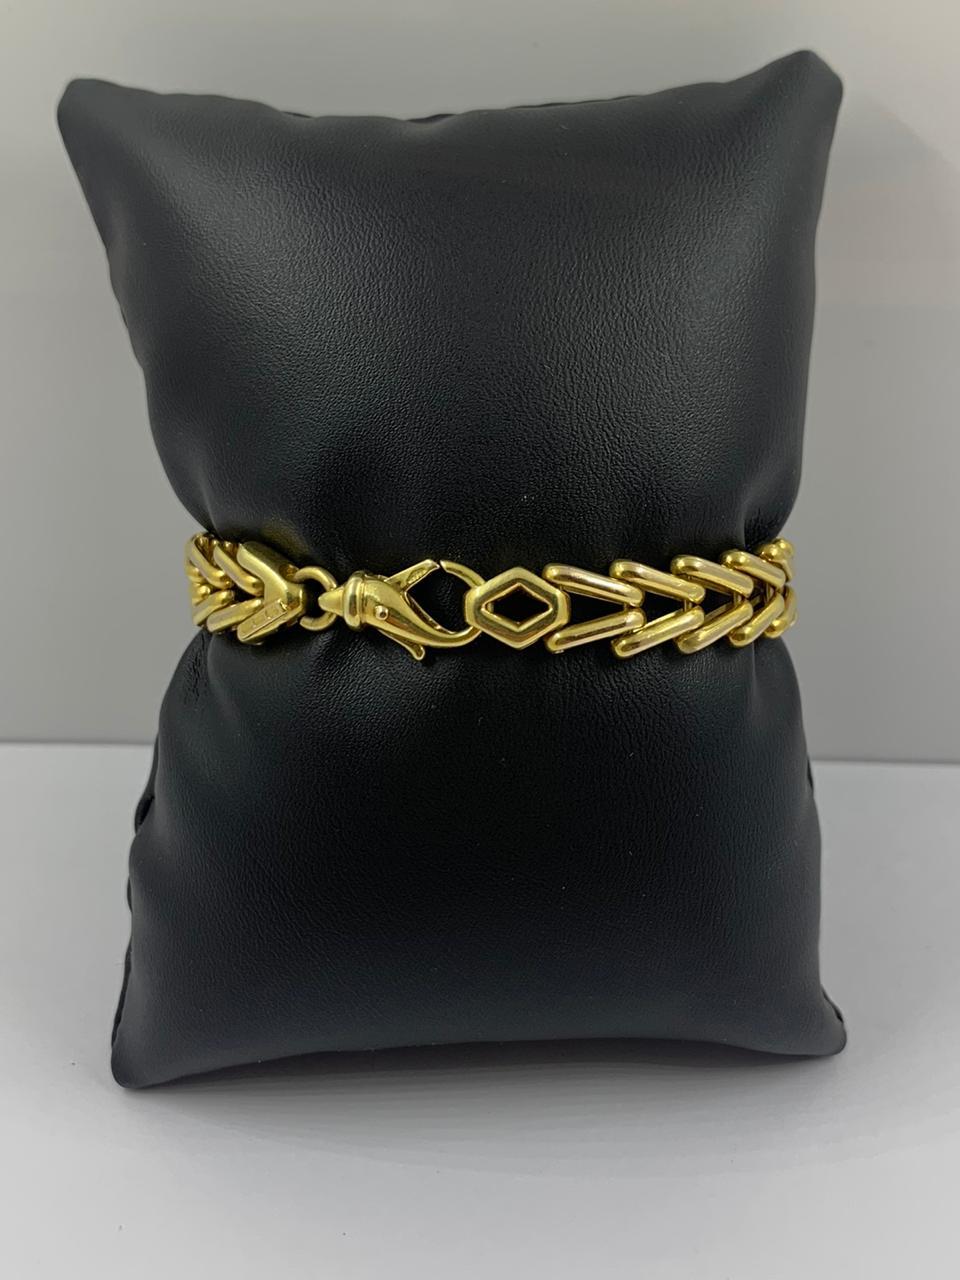 14kt yellow Gold V-link bracelet - 6.5 inches - 14.3 grams